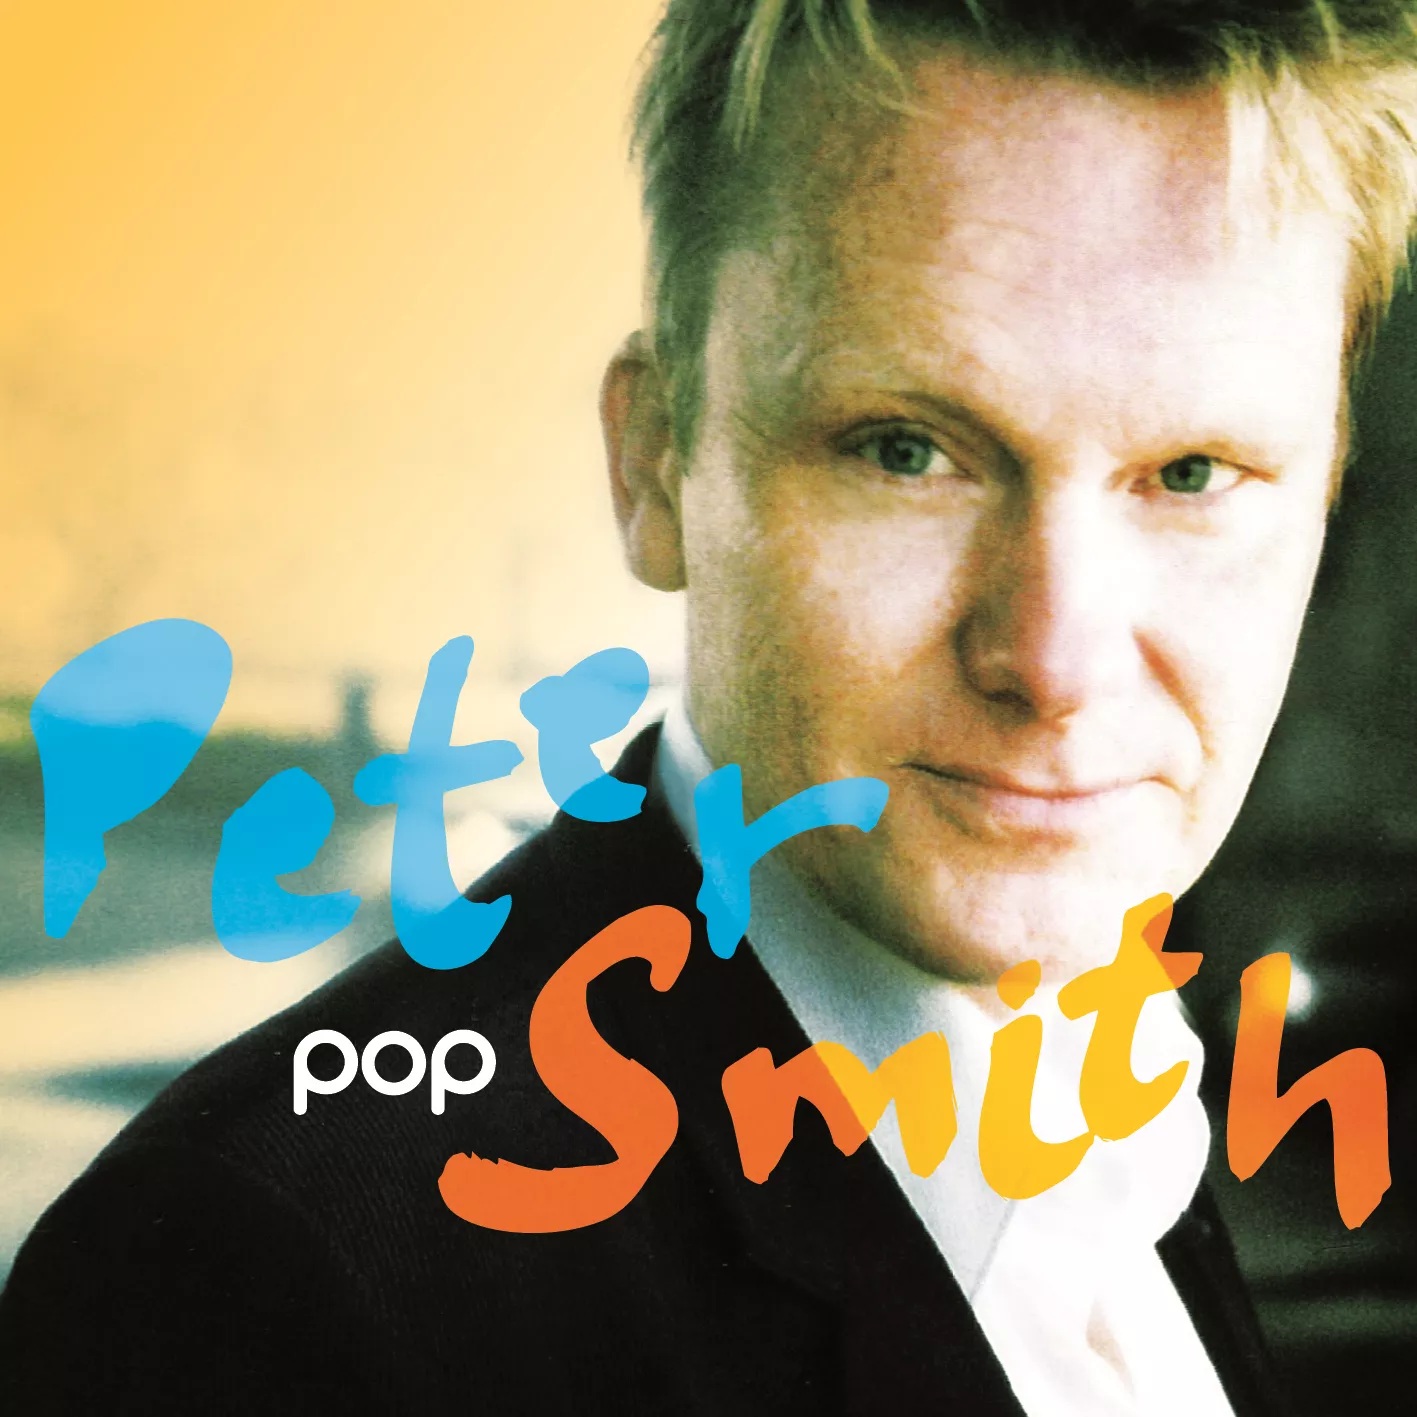 Pop - Peter Smith